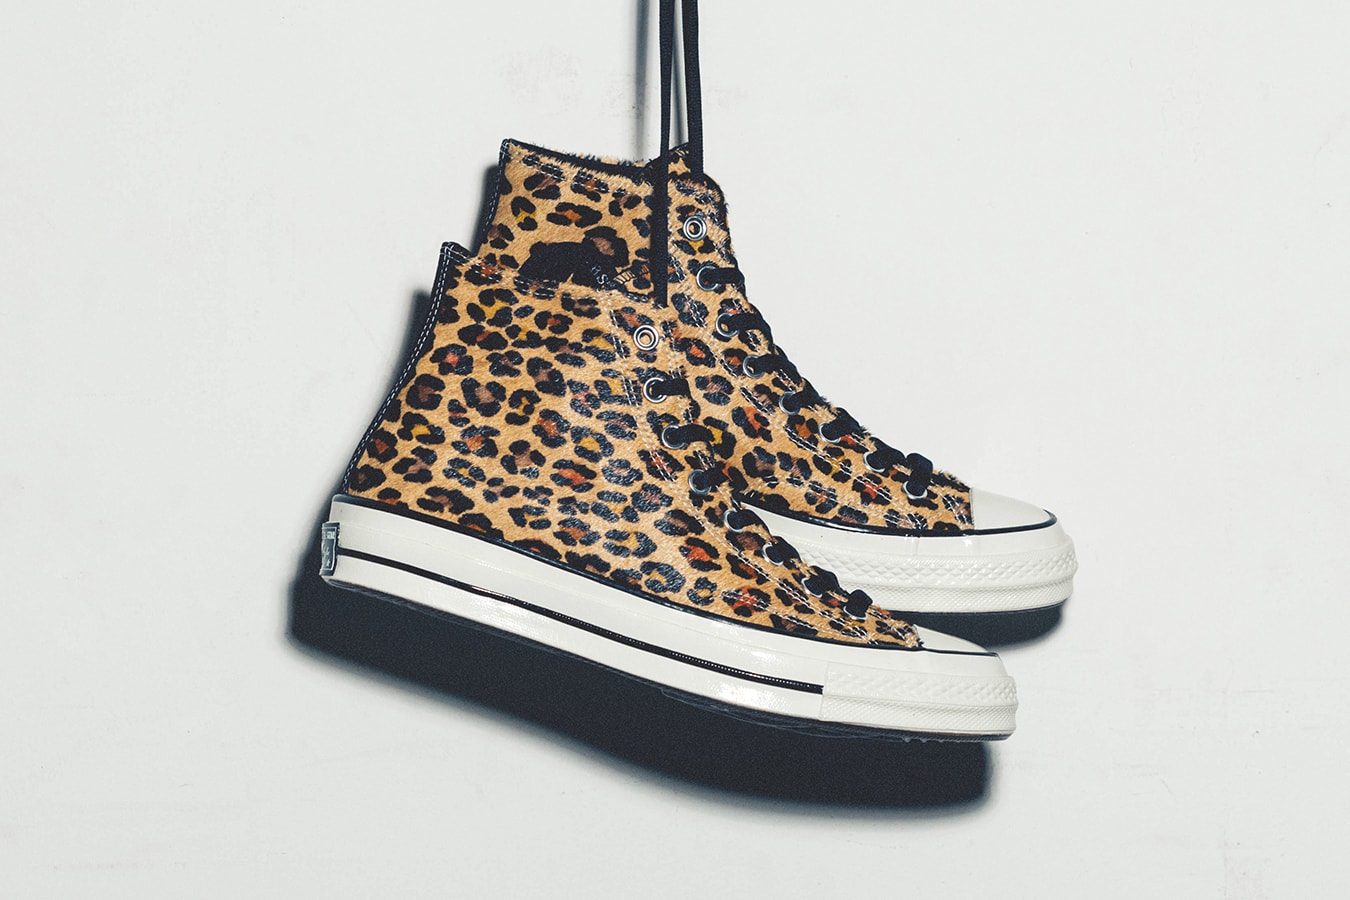 Converse Chuck Taylor All Star Leopard Print Fur High Top Sneakers